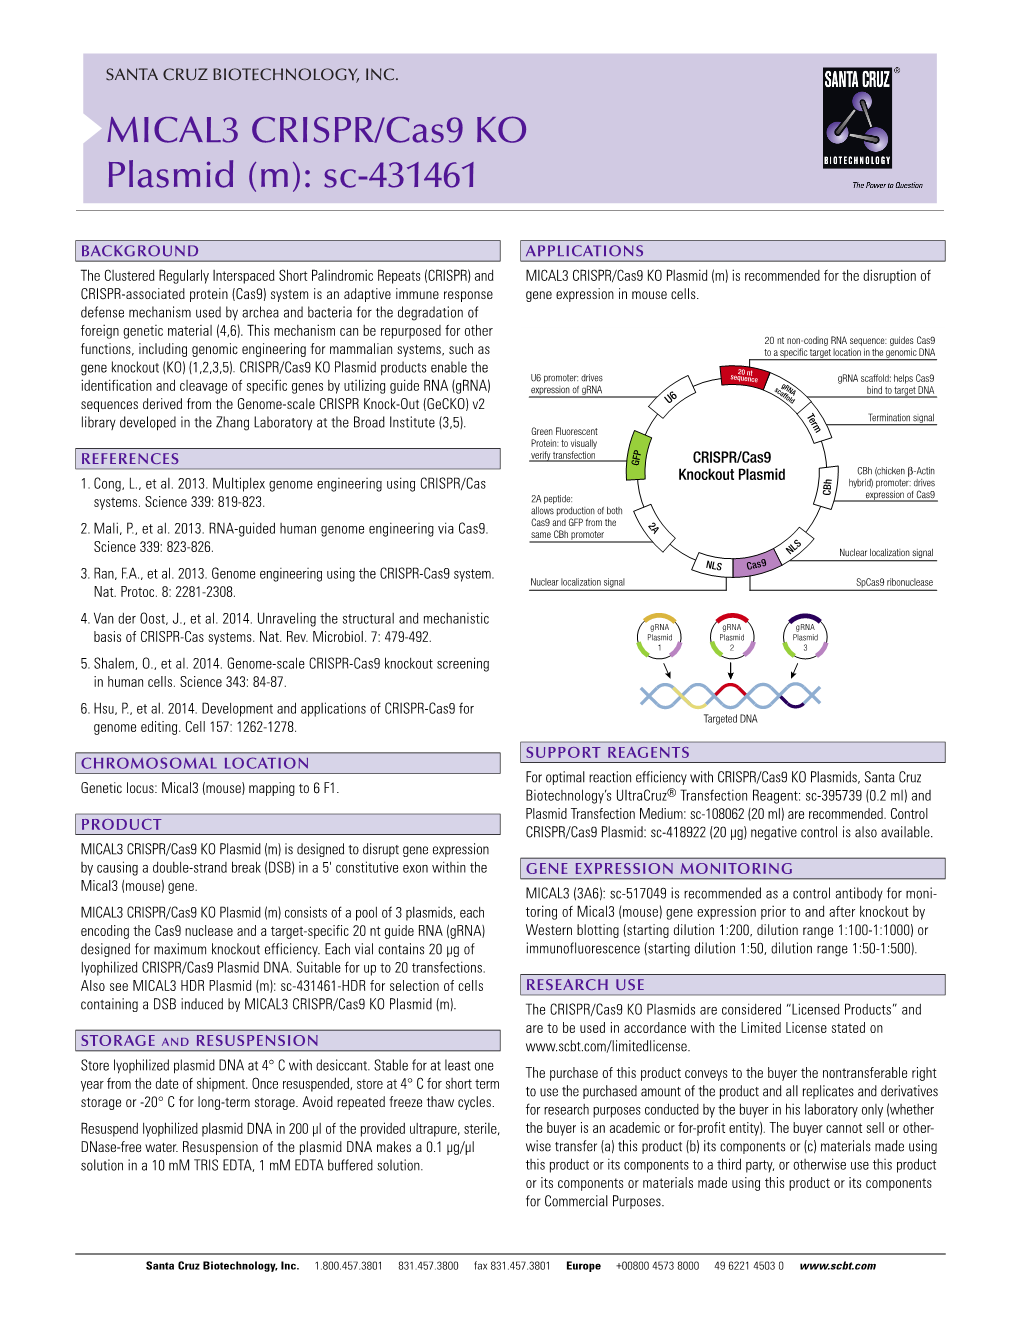 MICAL3 CRISPR/Cas9 KO Plasmid (M): Sc-431461